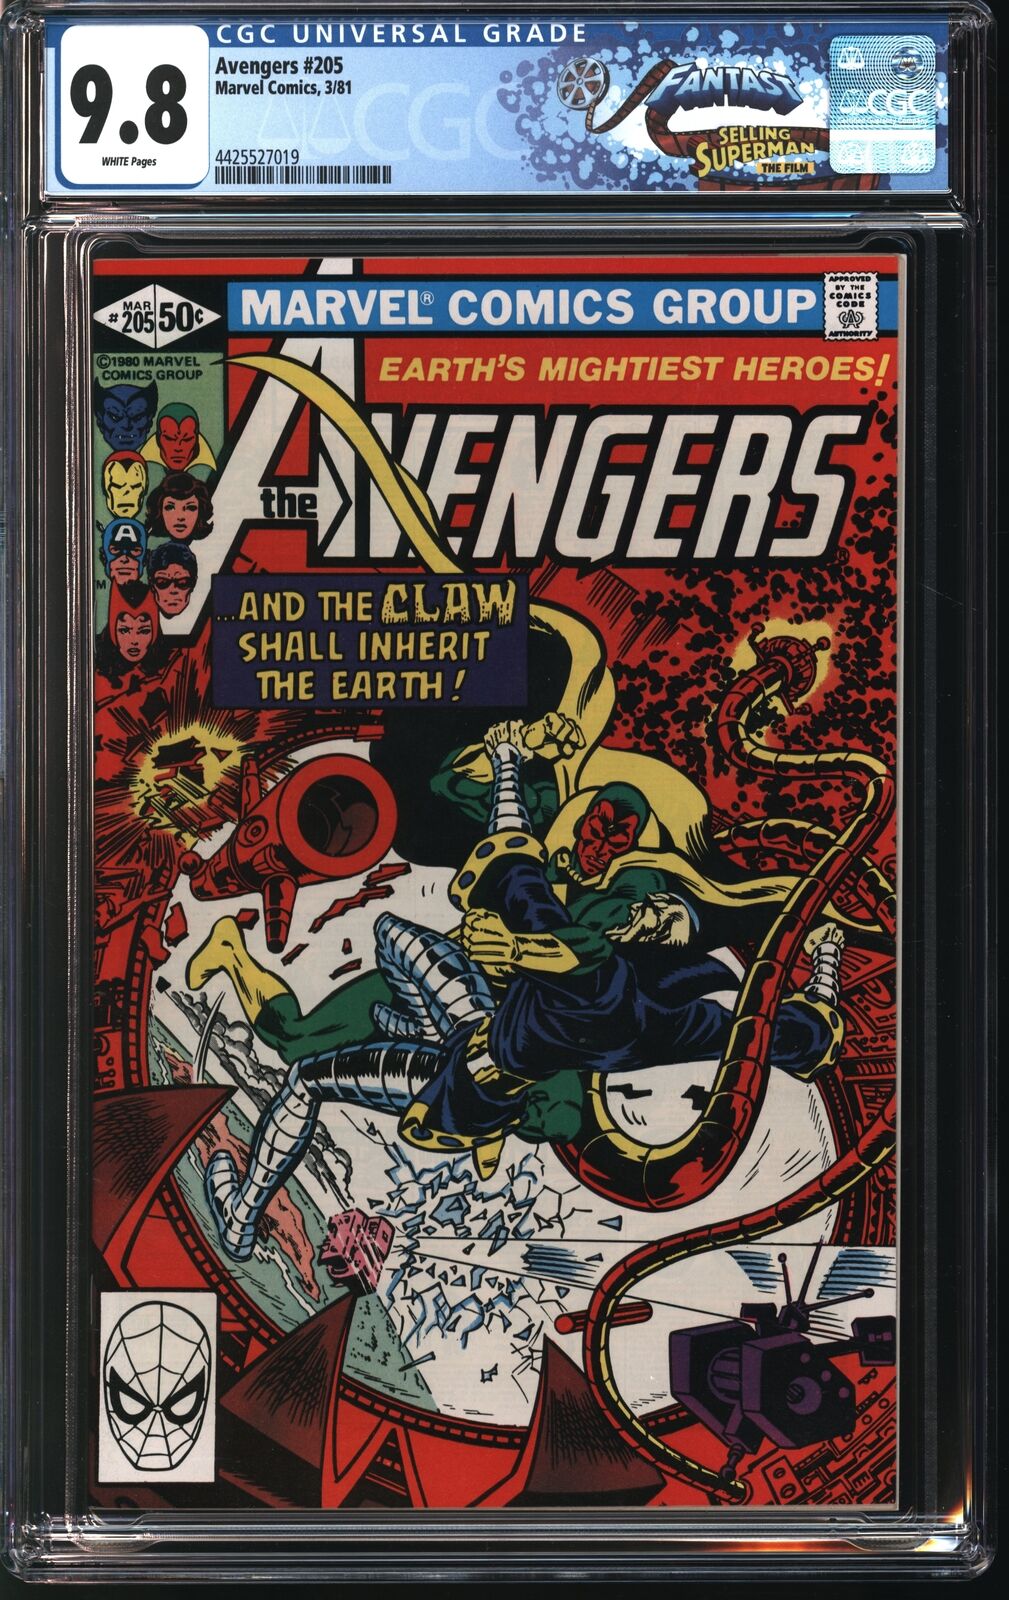 Marvel Comics Avengers 205 3/81 FANTAST CGC 9.8 White Pages